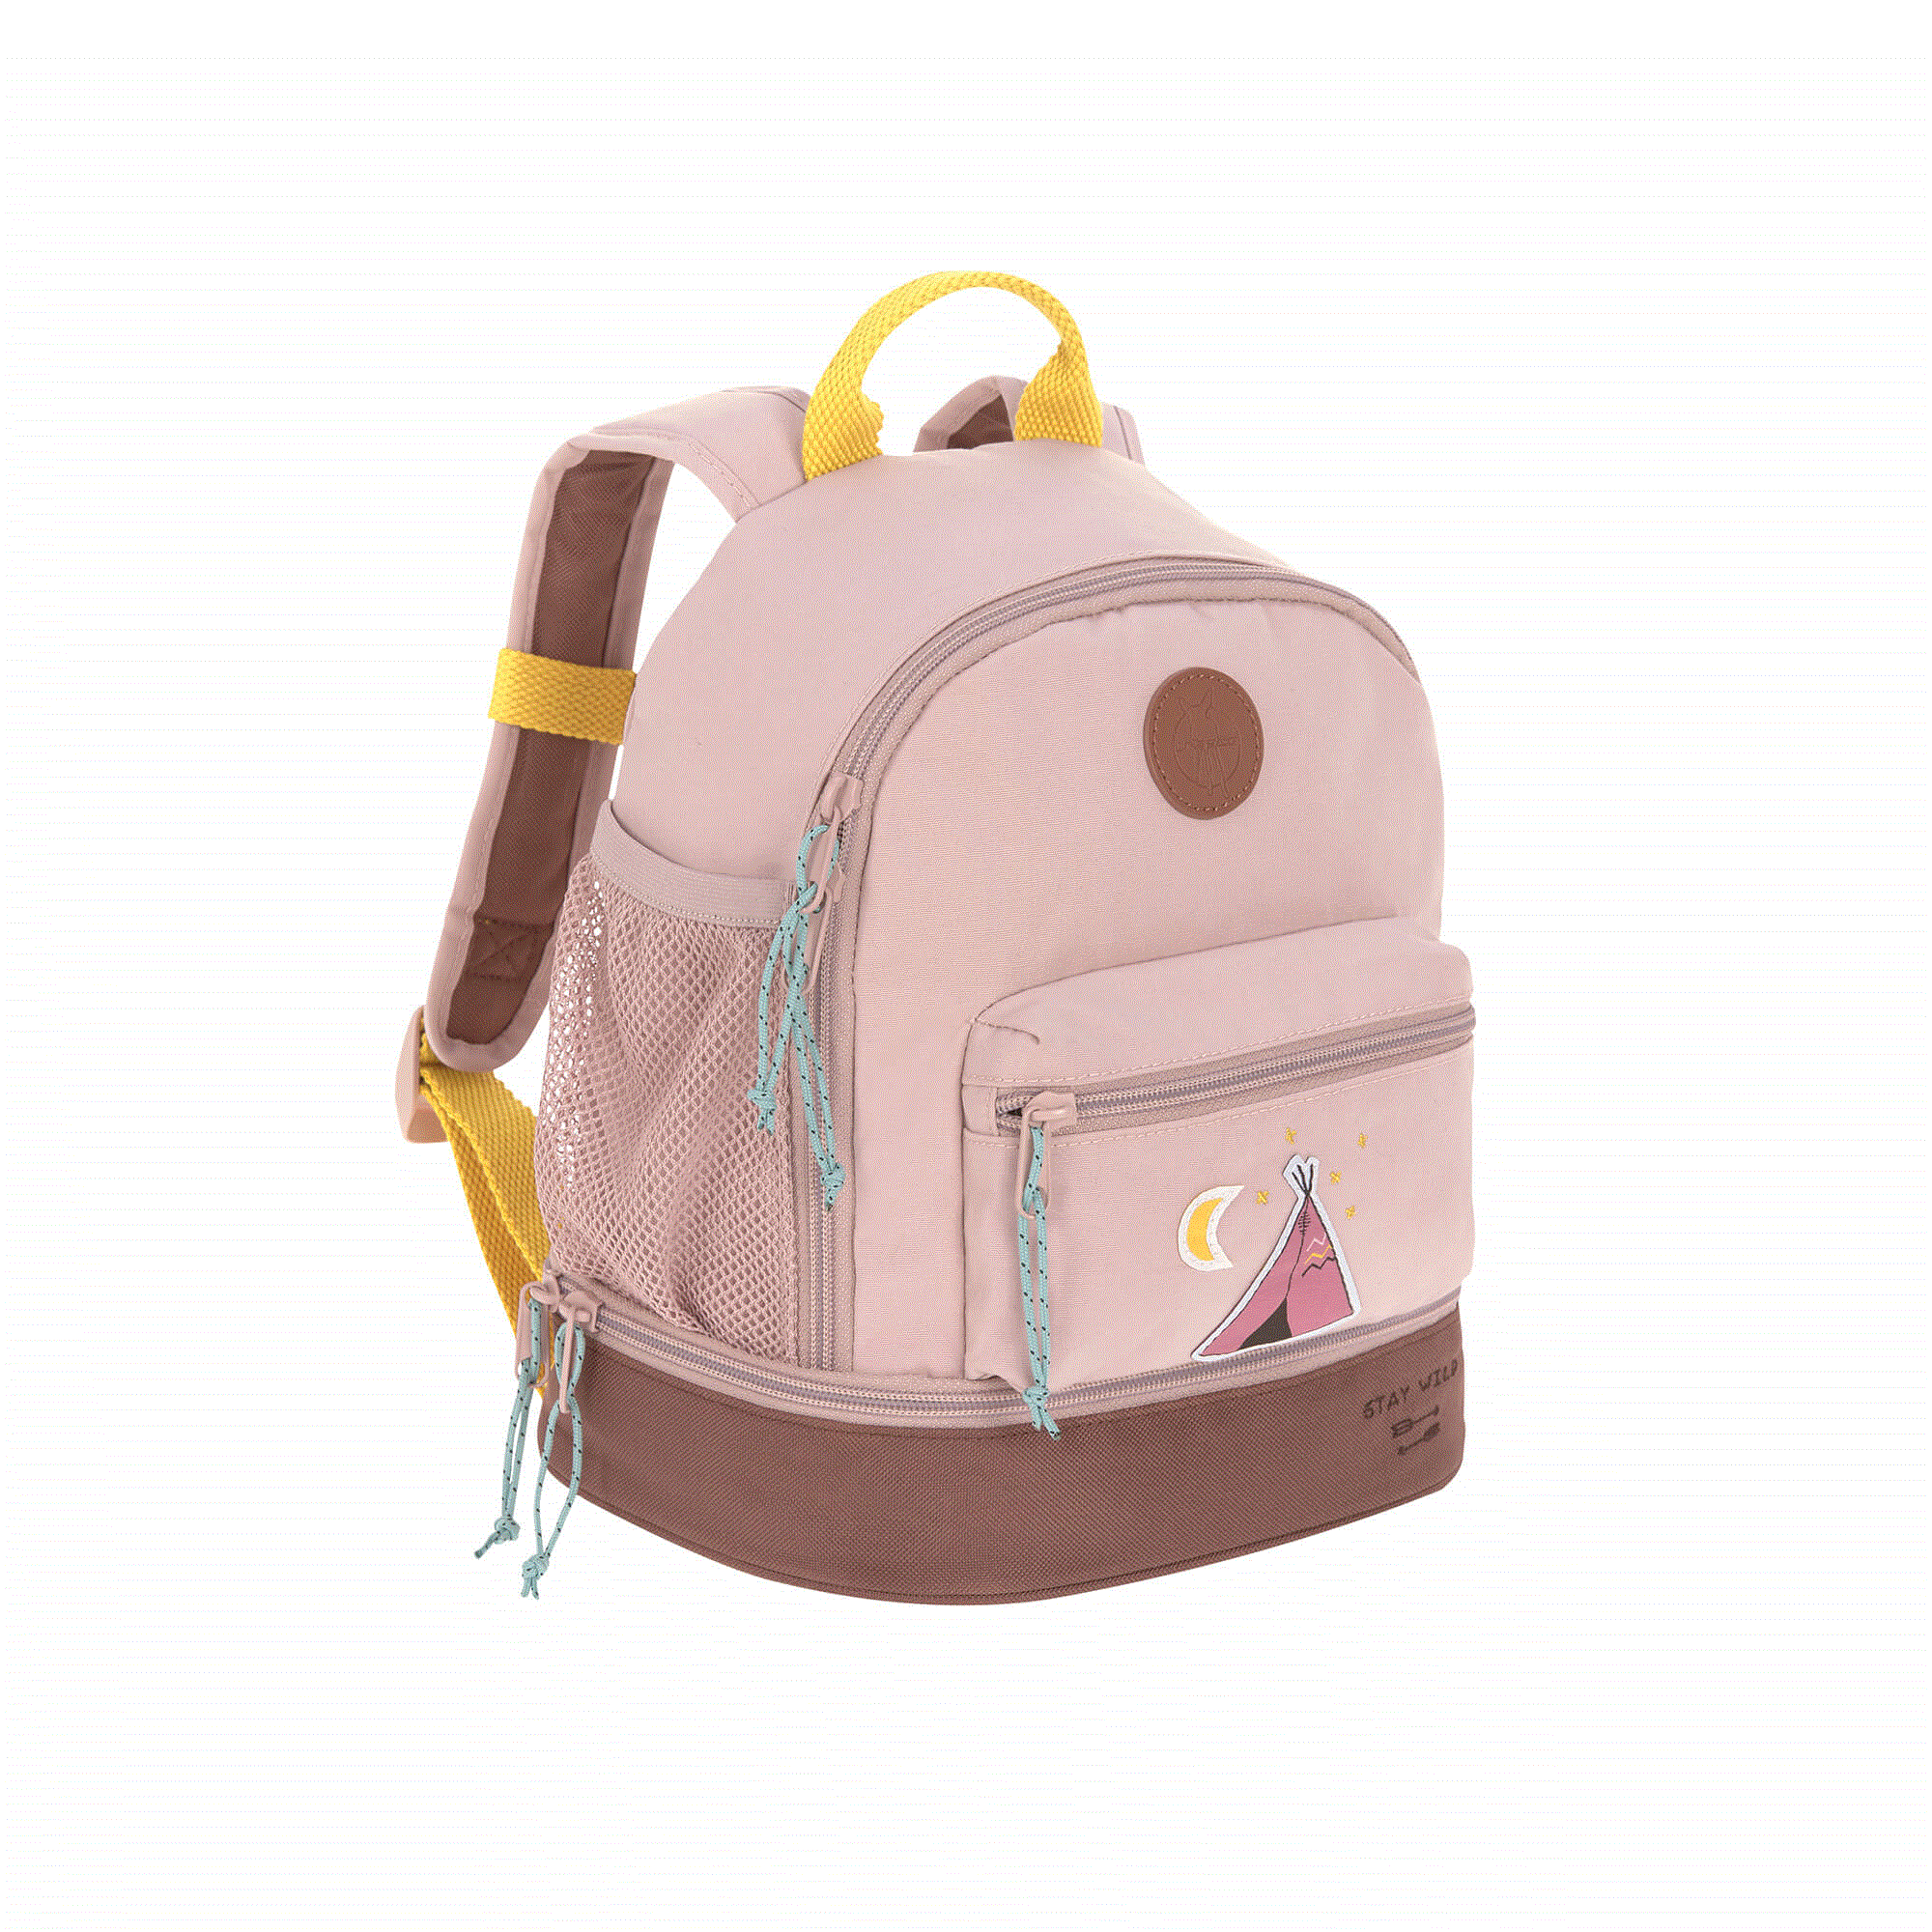 und Mini | Koffer Backpack | Fips Tipi | Rucksäcke Adventure Lässig Taschen